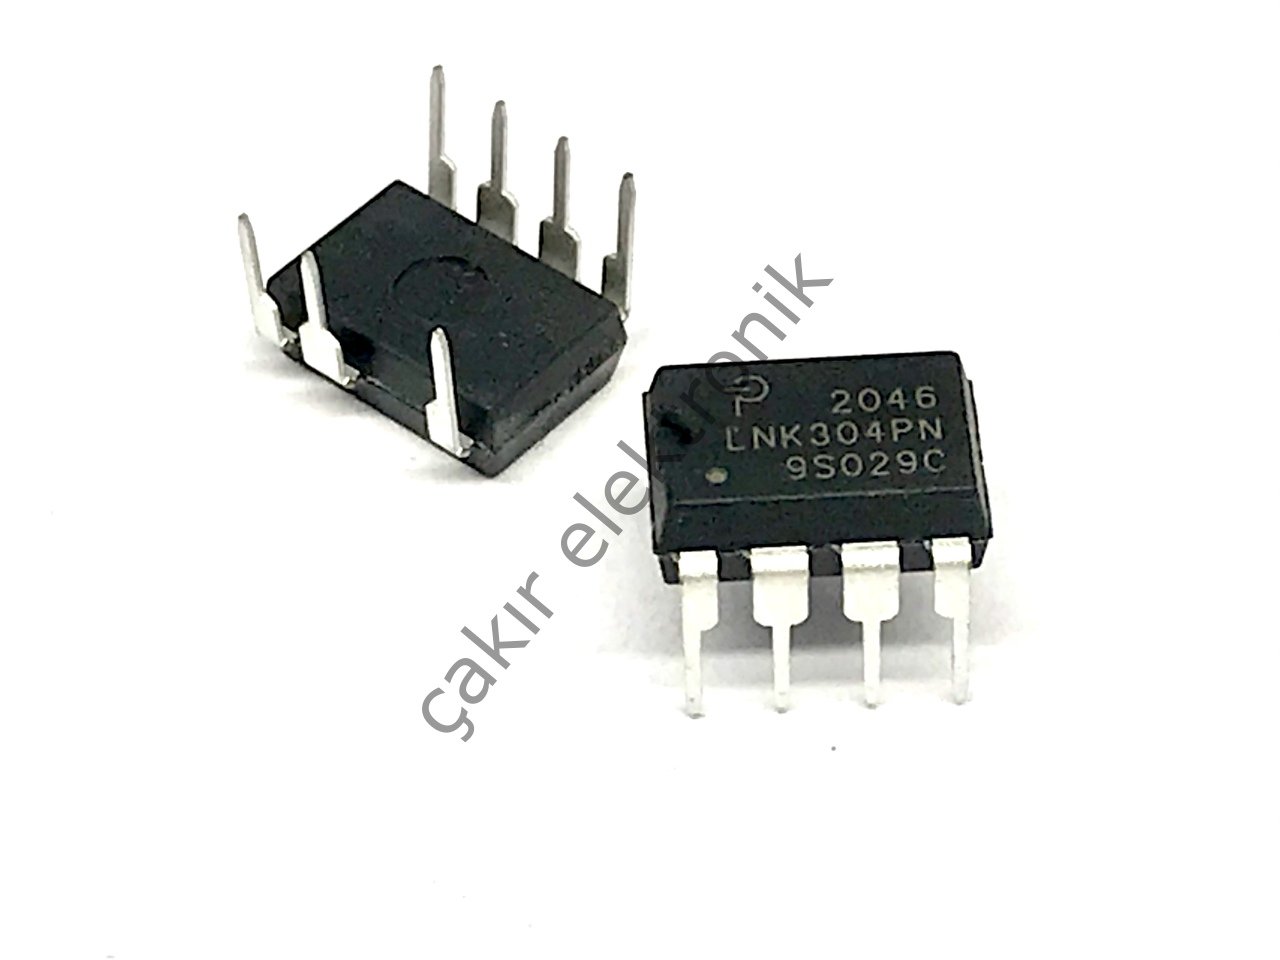 LNK304PN - LNK304 Lowest Component Count, Energy-Efficient Off-Line Switcher IC